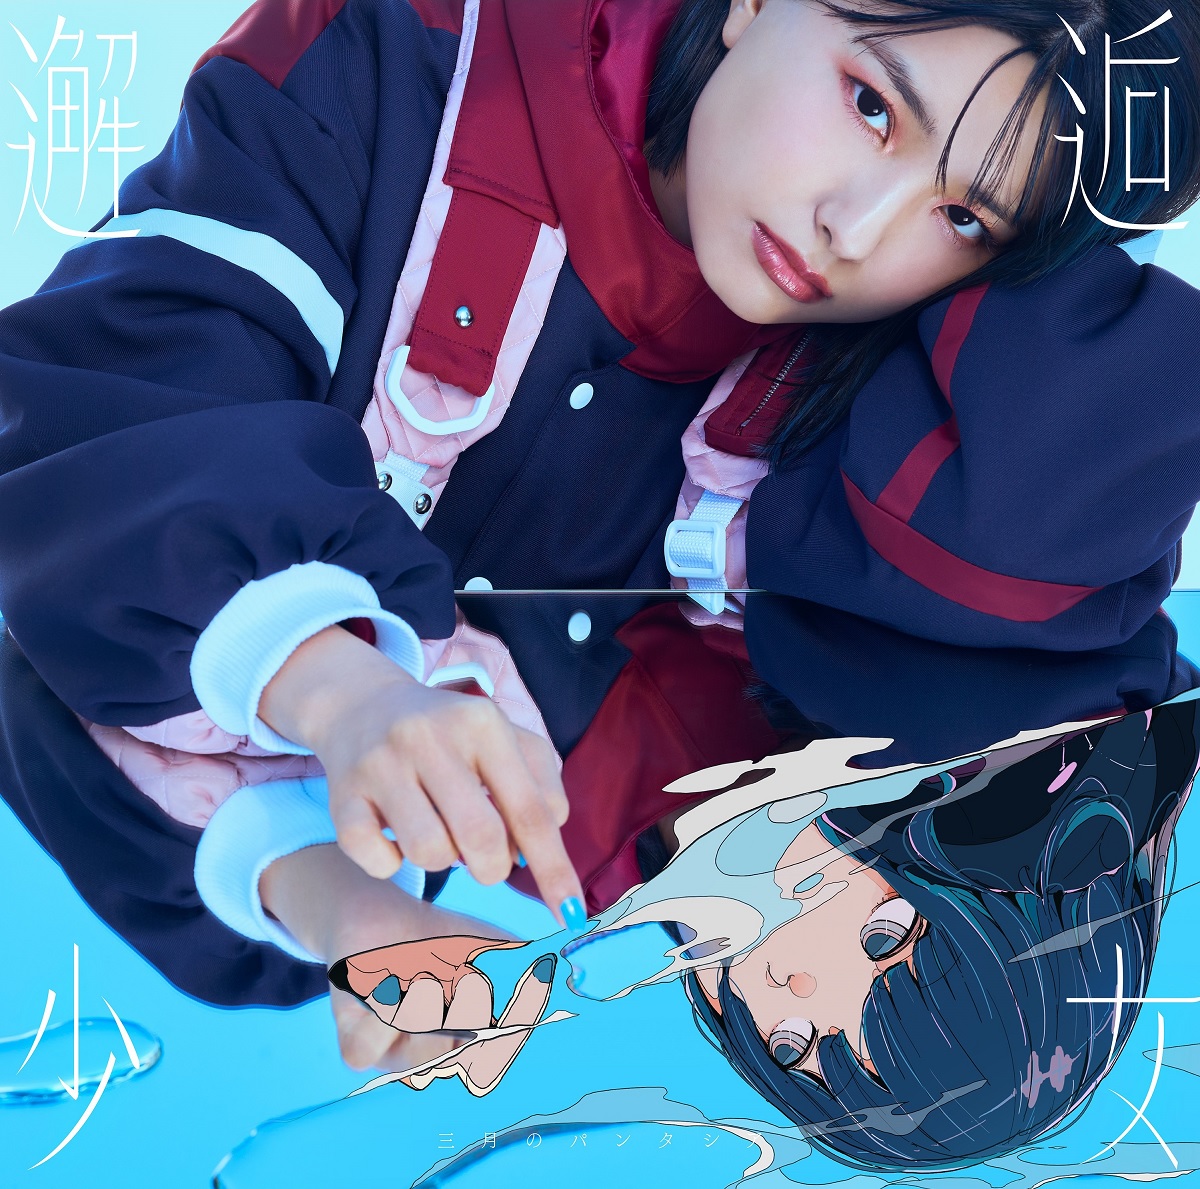 Cover art for『Sangatsu no Phantasia - Serious』from the release『Kaikou Shoujo』